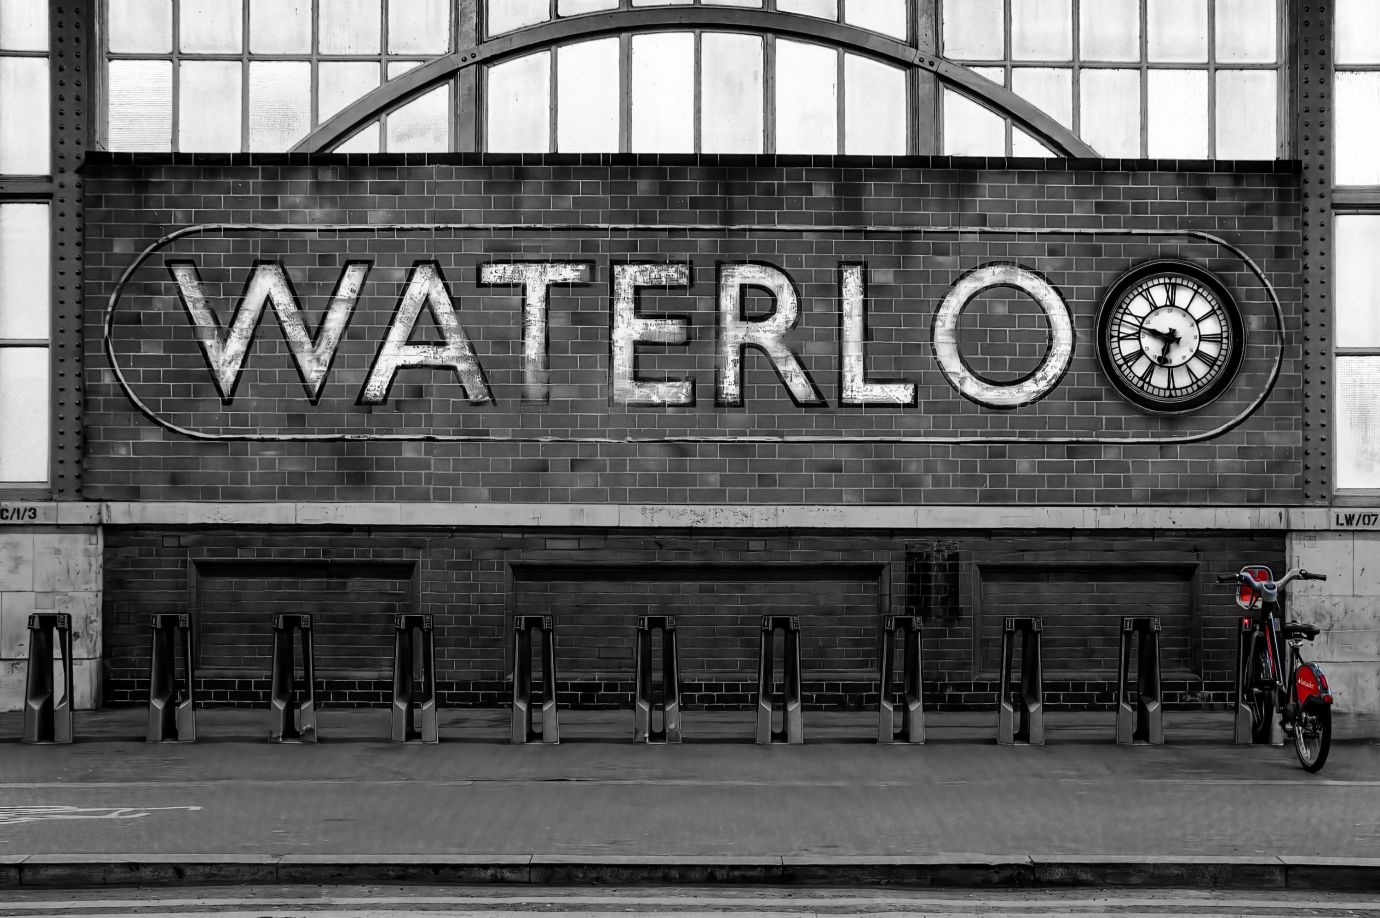 waterloo-station-clock-red-ebike-moncohrome-London-30032022